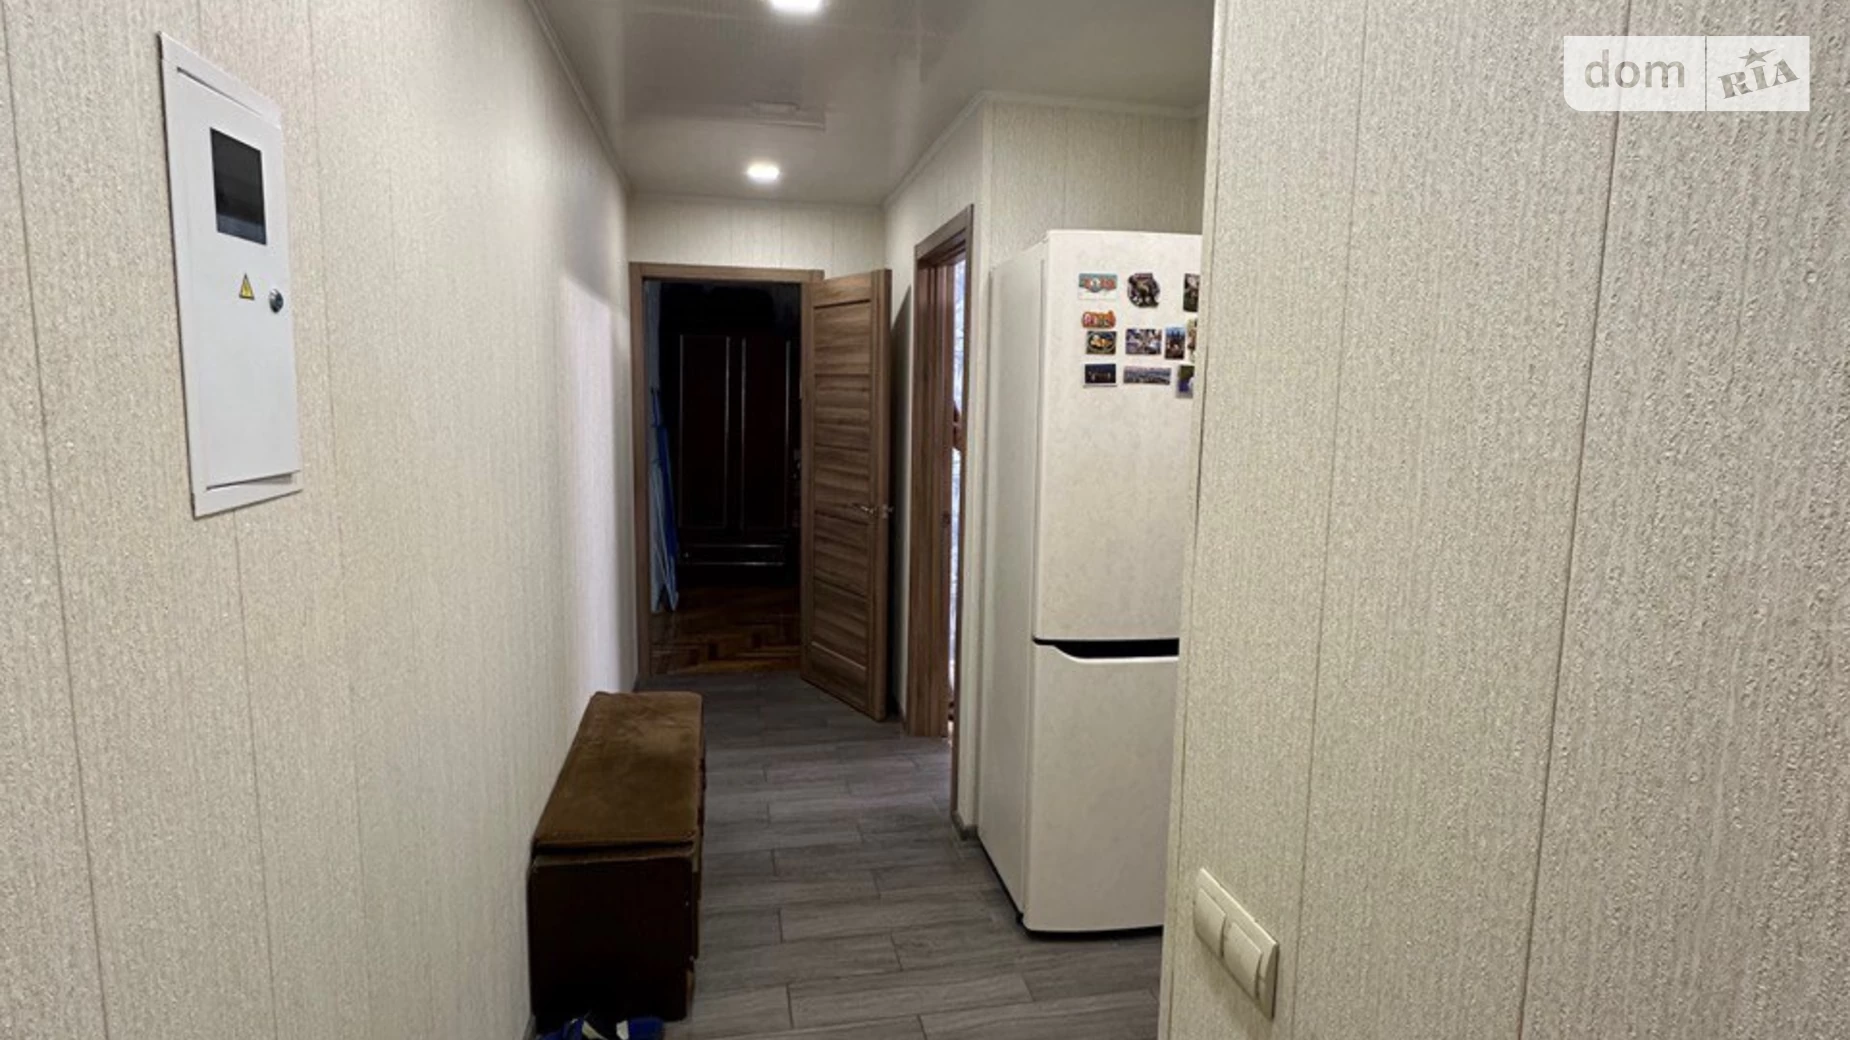 3-комнатная квартира 59.6 кв. м в Запорожье, ул. Гоголя, 159 - фото 3